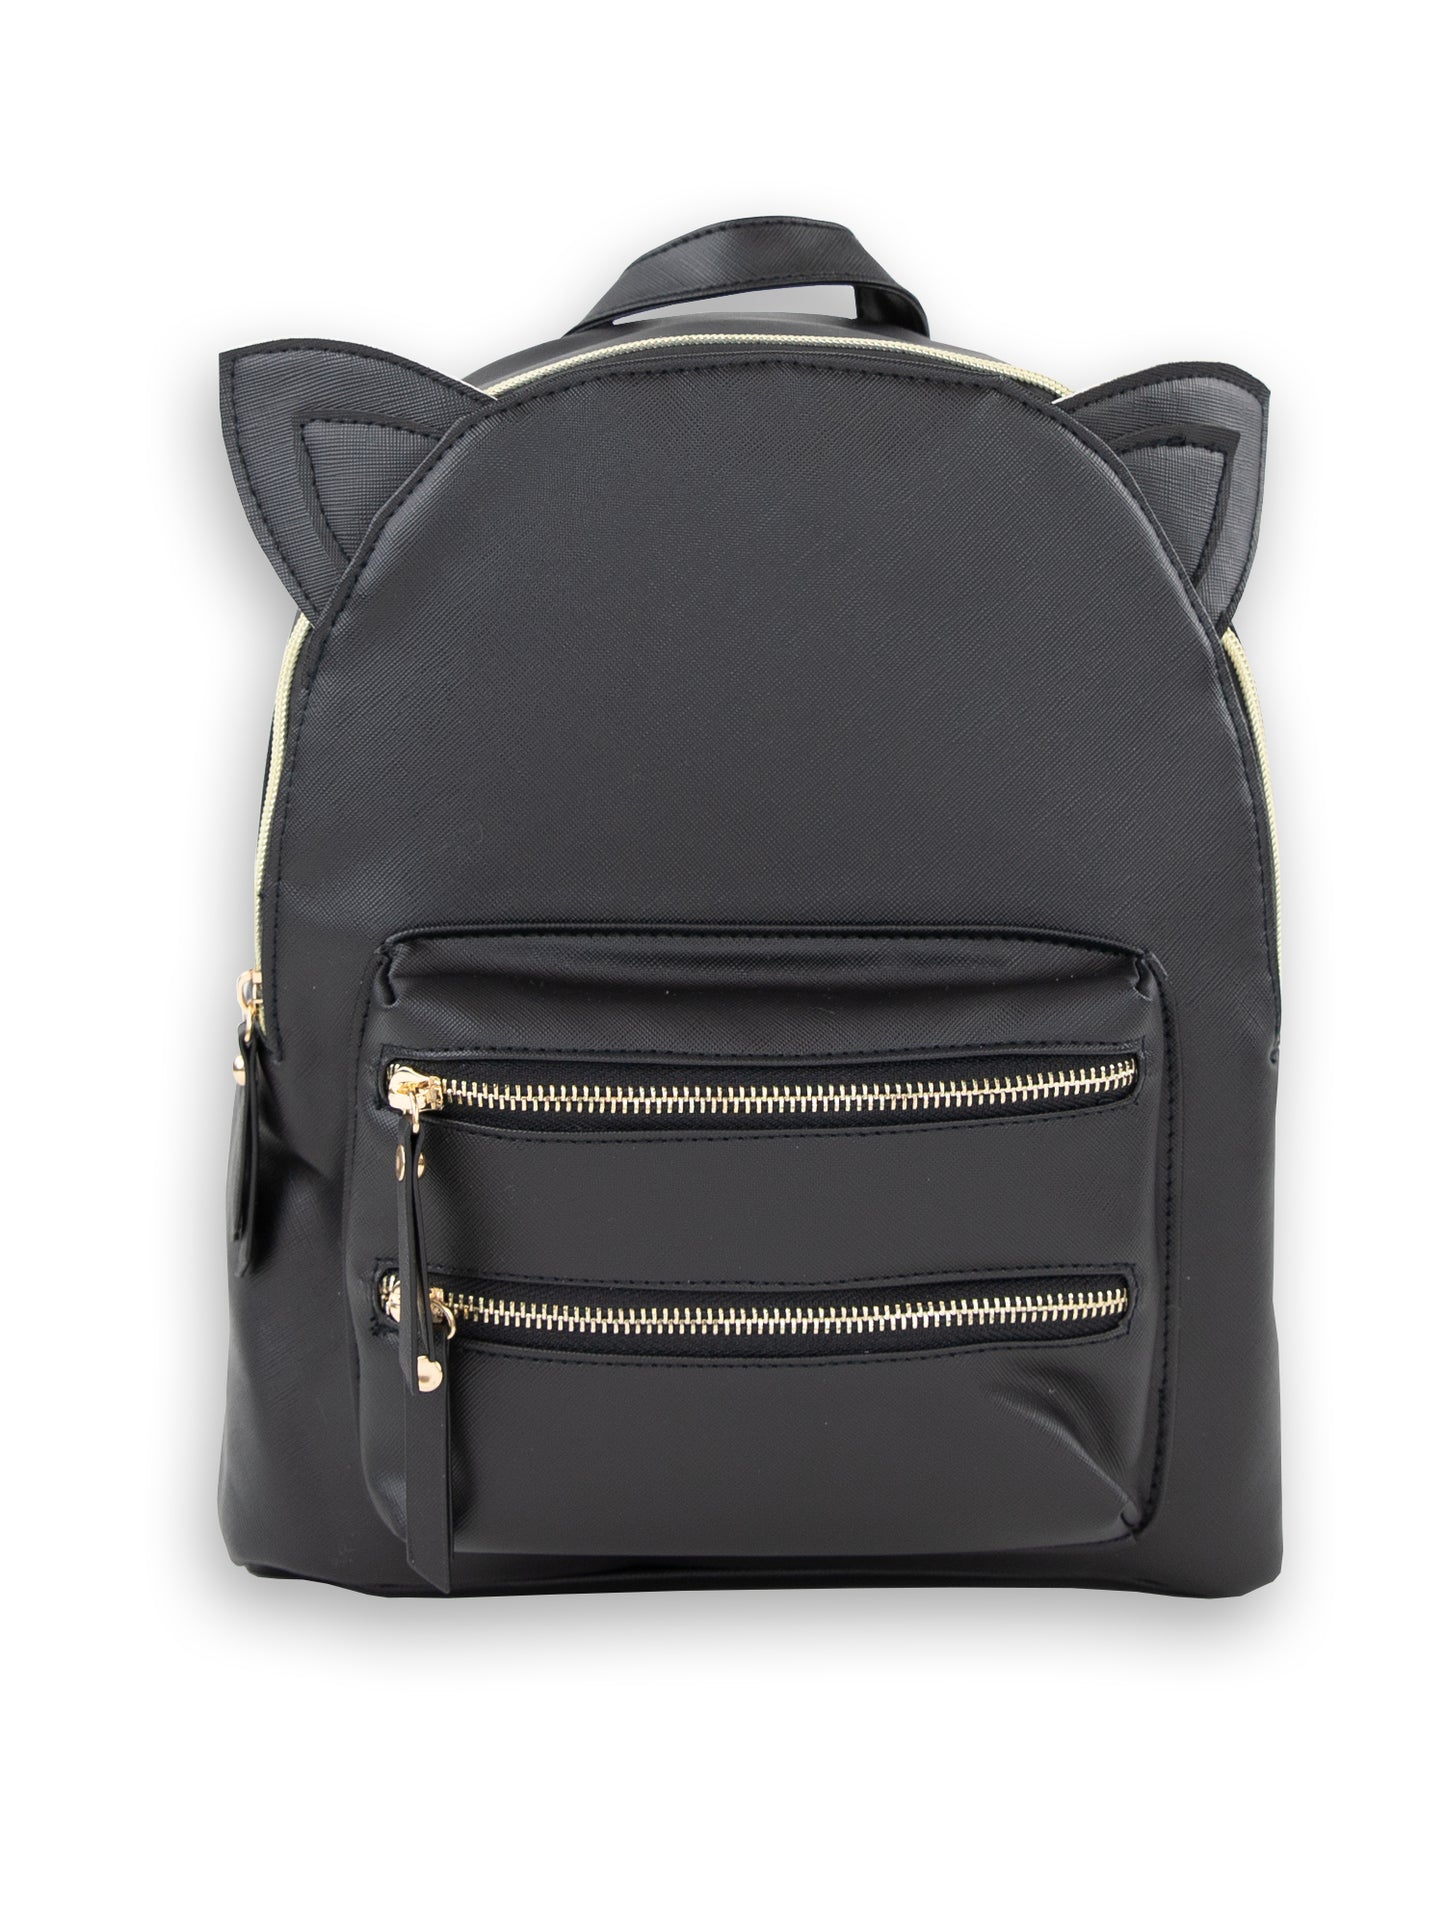 Under One Sky Black Cat Backpack